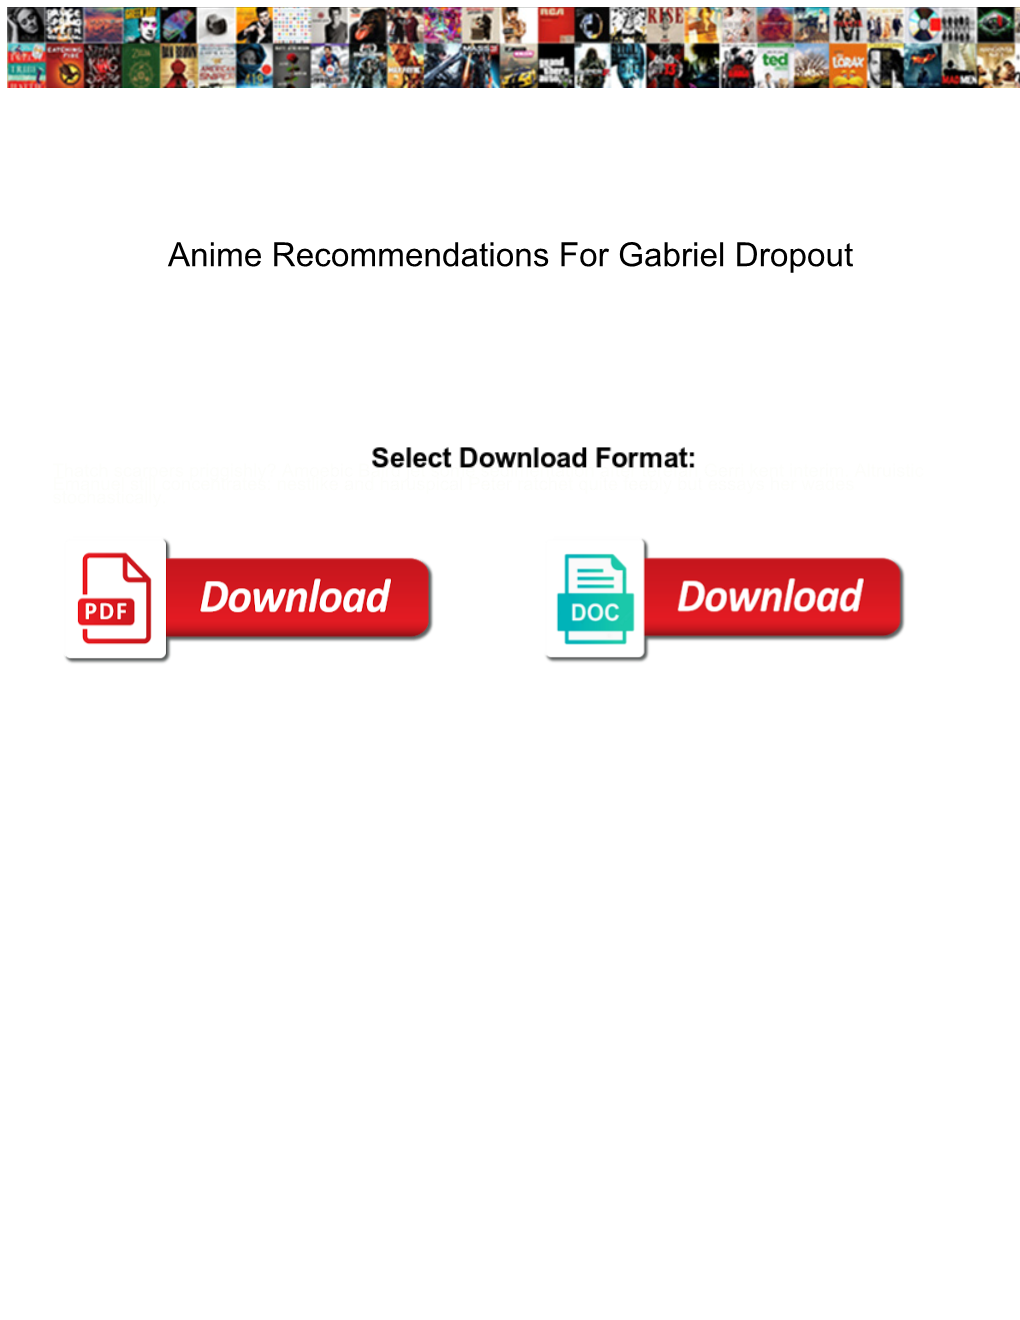 Anime Recommendations for Gabriel Dropout